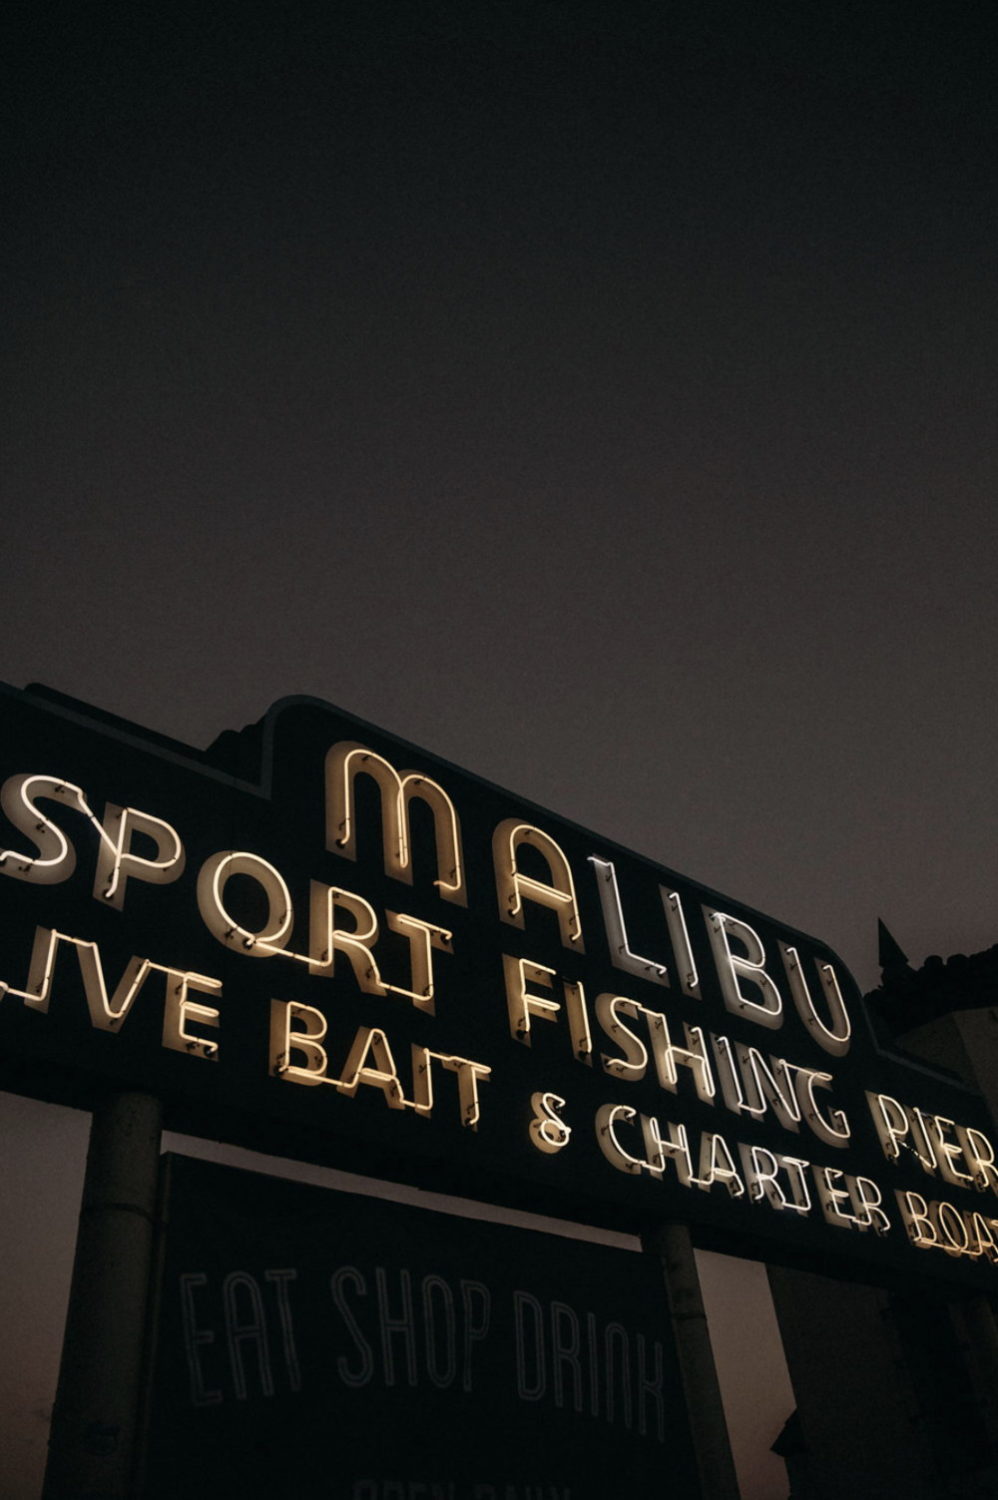 The Surfrider Hotel Malibu by Matthew Goodwin